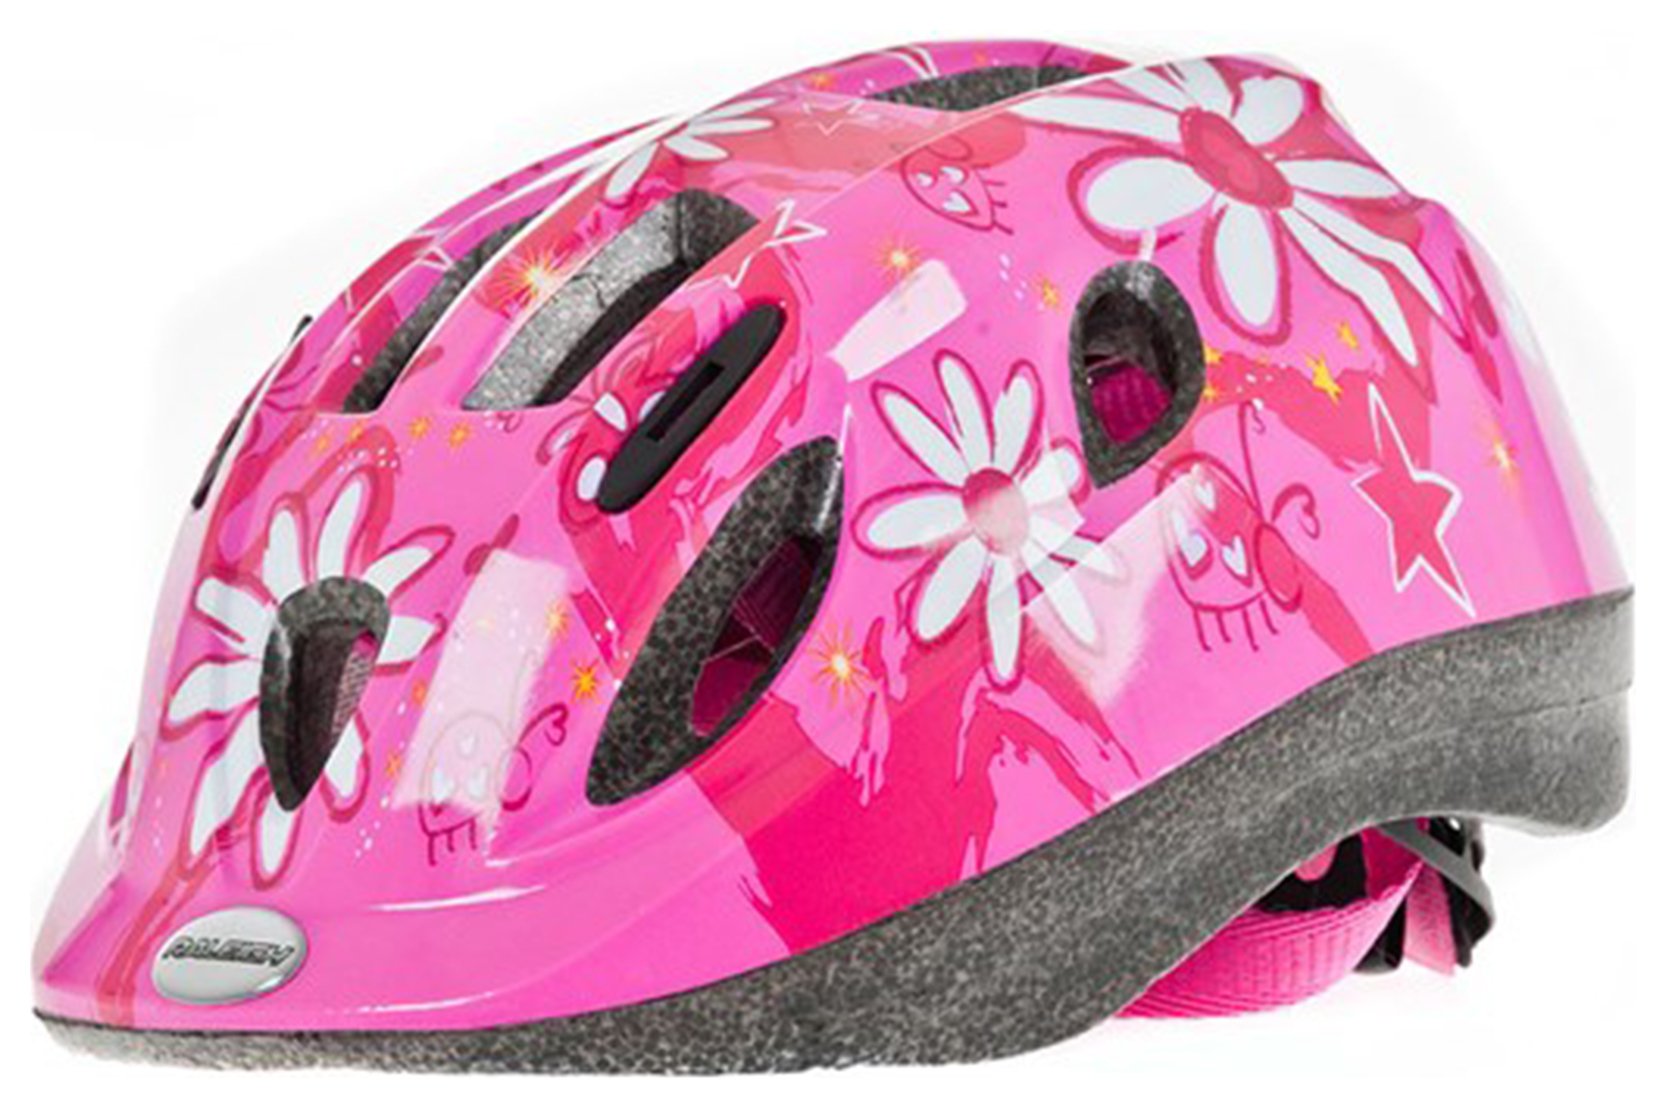 Raleigh Mystery 48-54cm Bike Helmet review